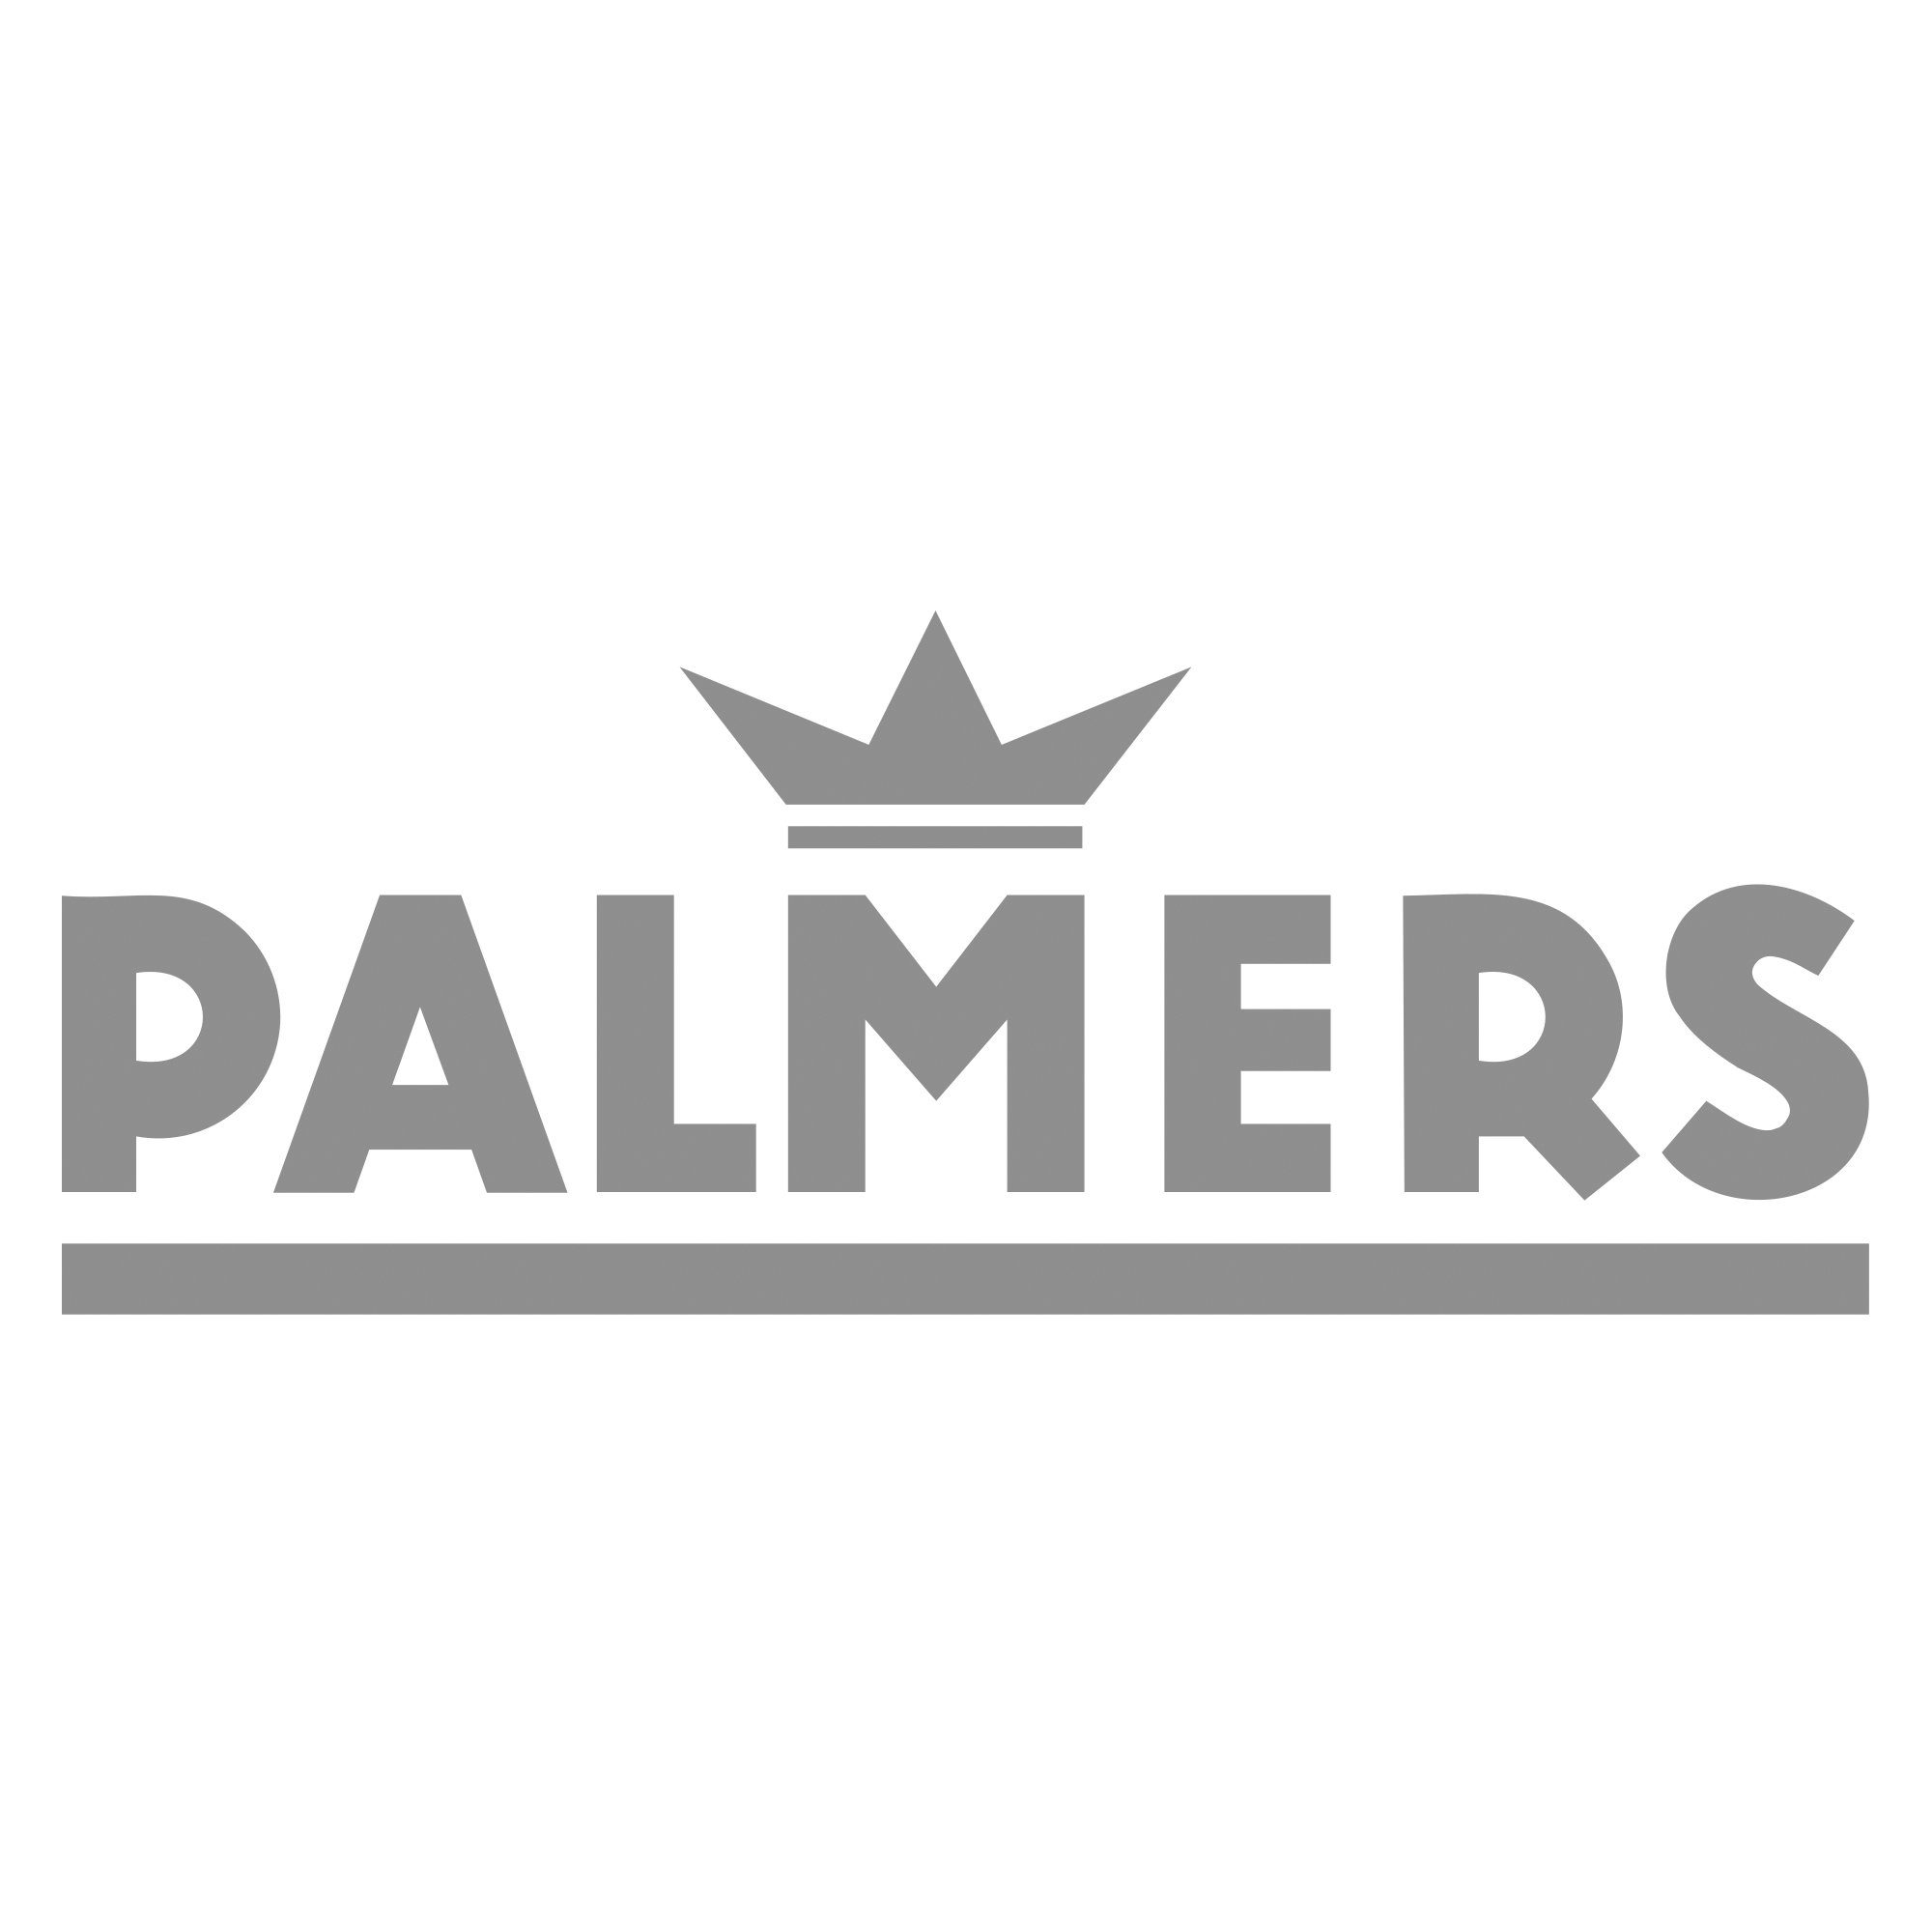 PALMERS